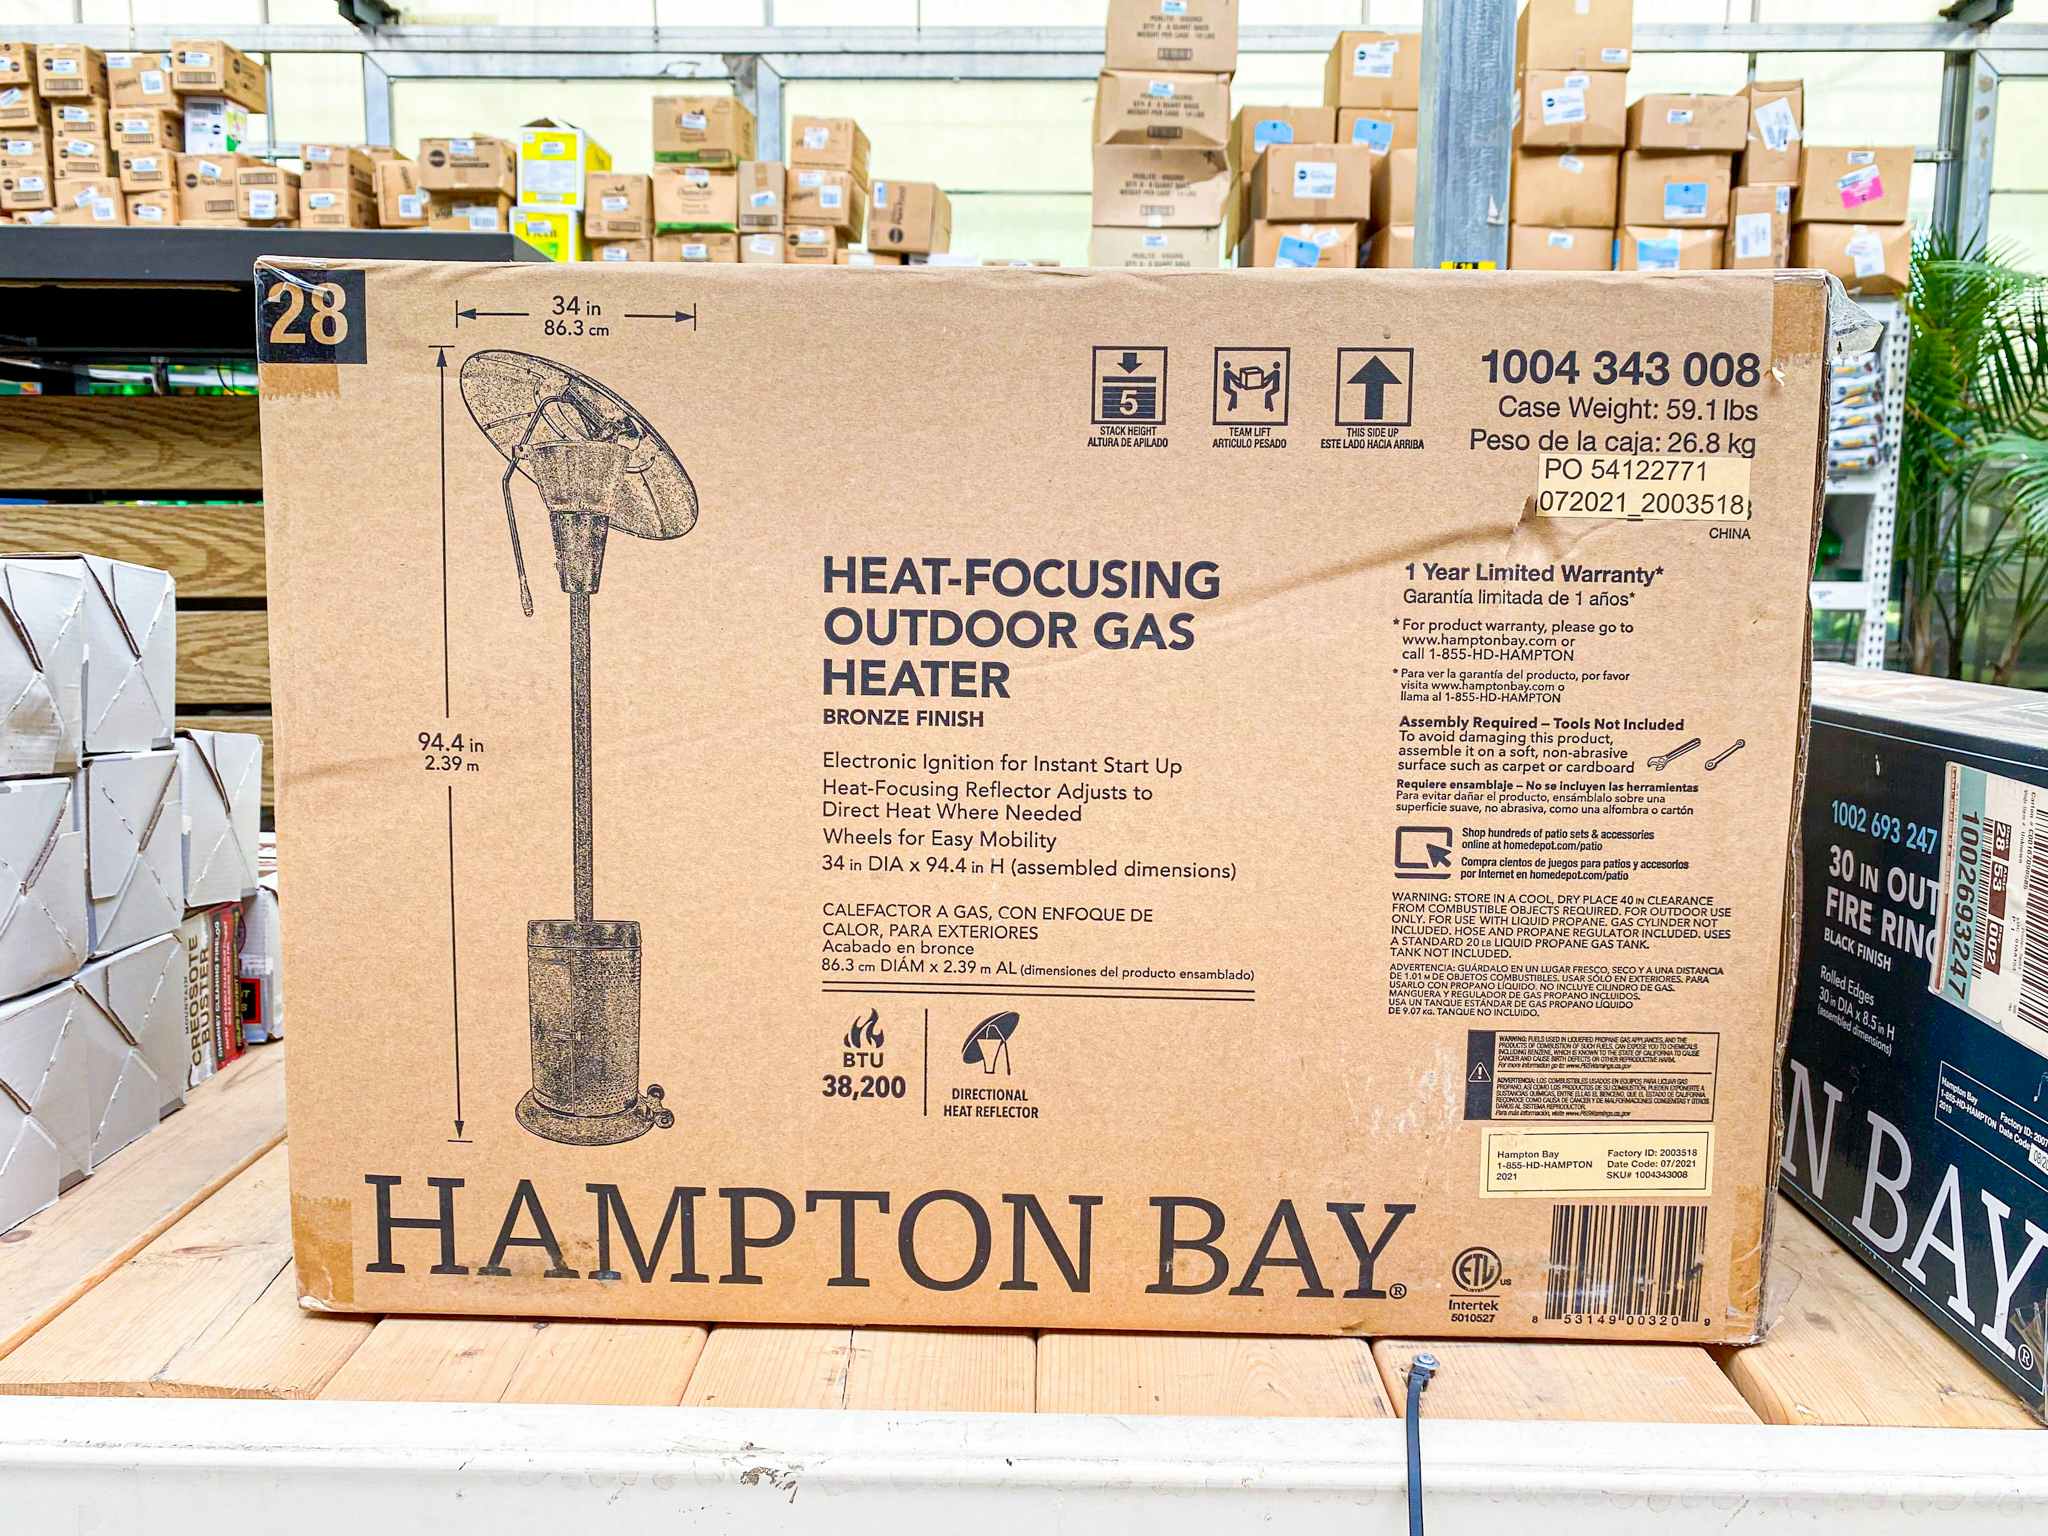 Hampton Bay Heat-Focusing Outdoor Gas Heater on display at Home Depot